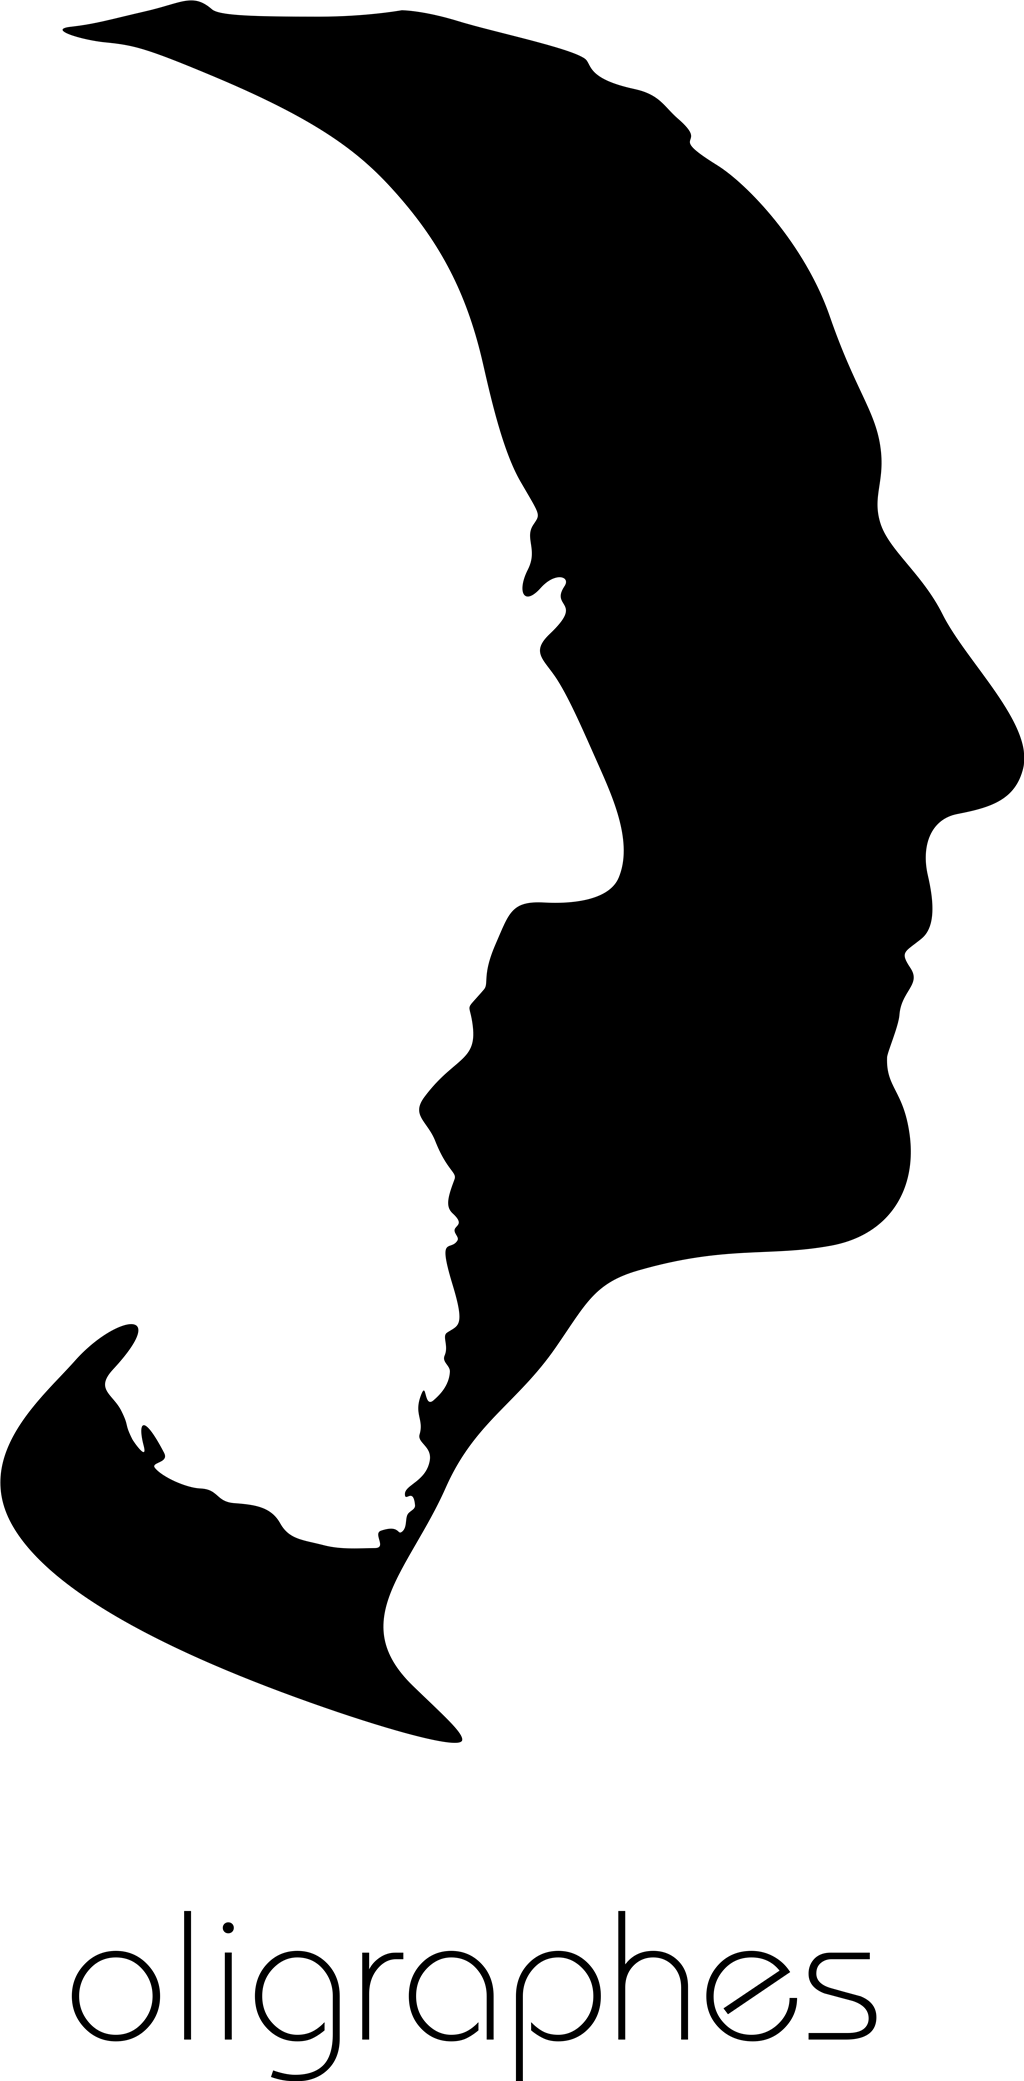 Oligraphes logotype, transparent .png, medium, large